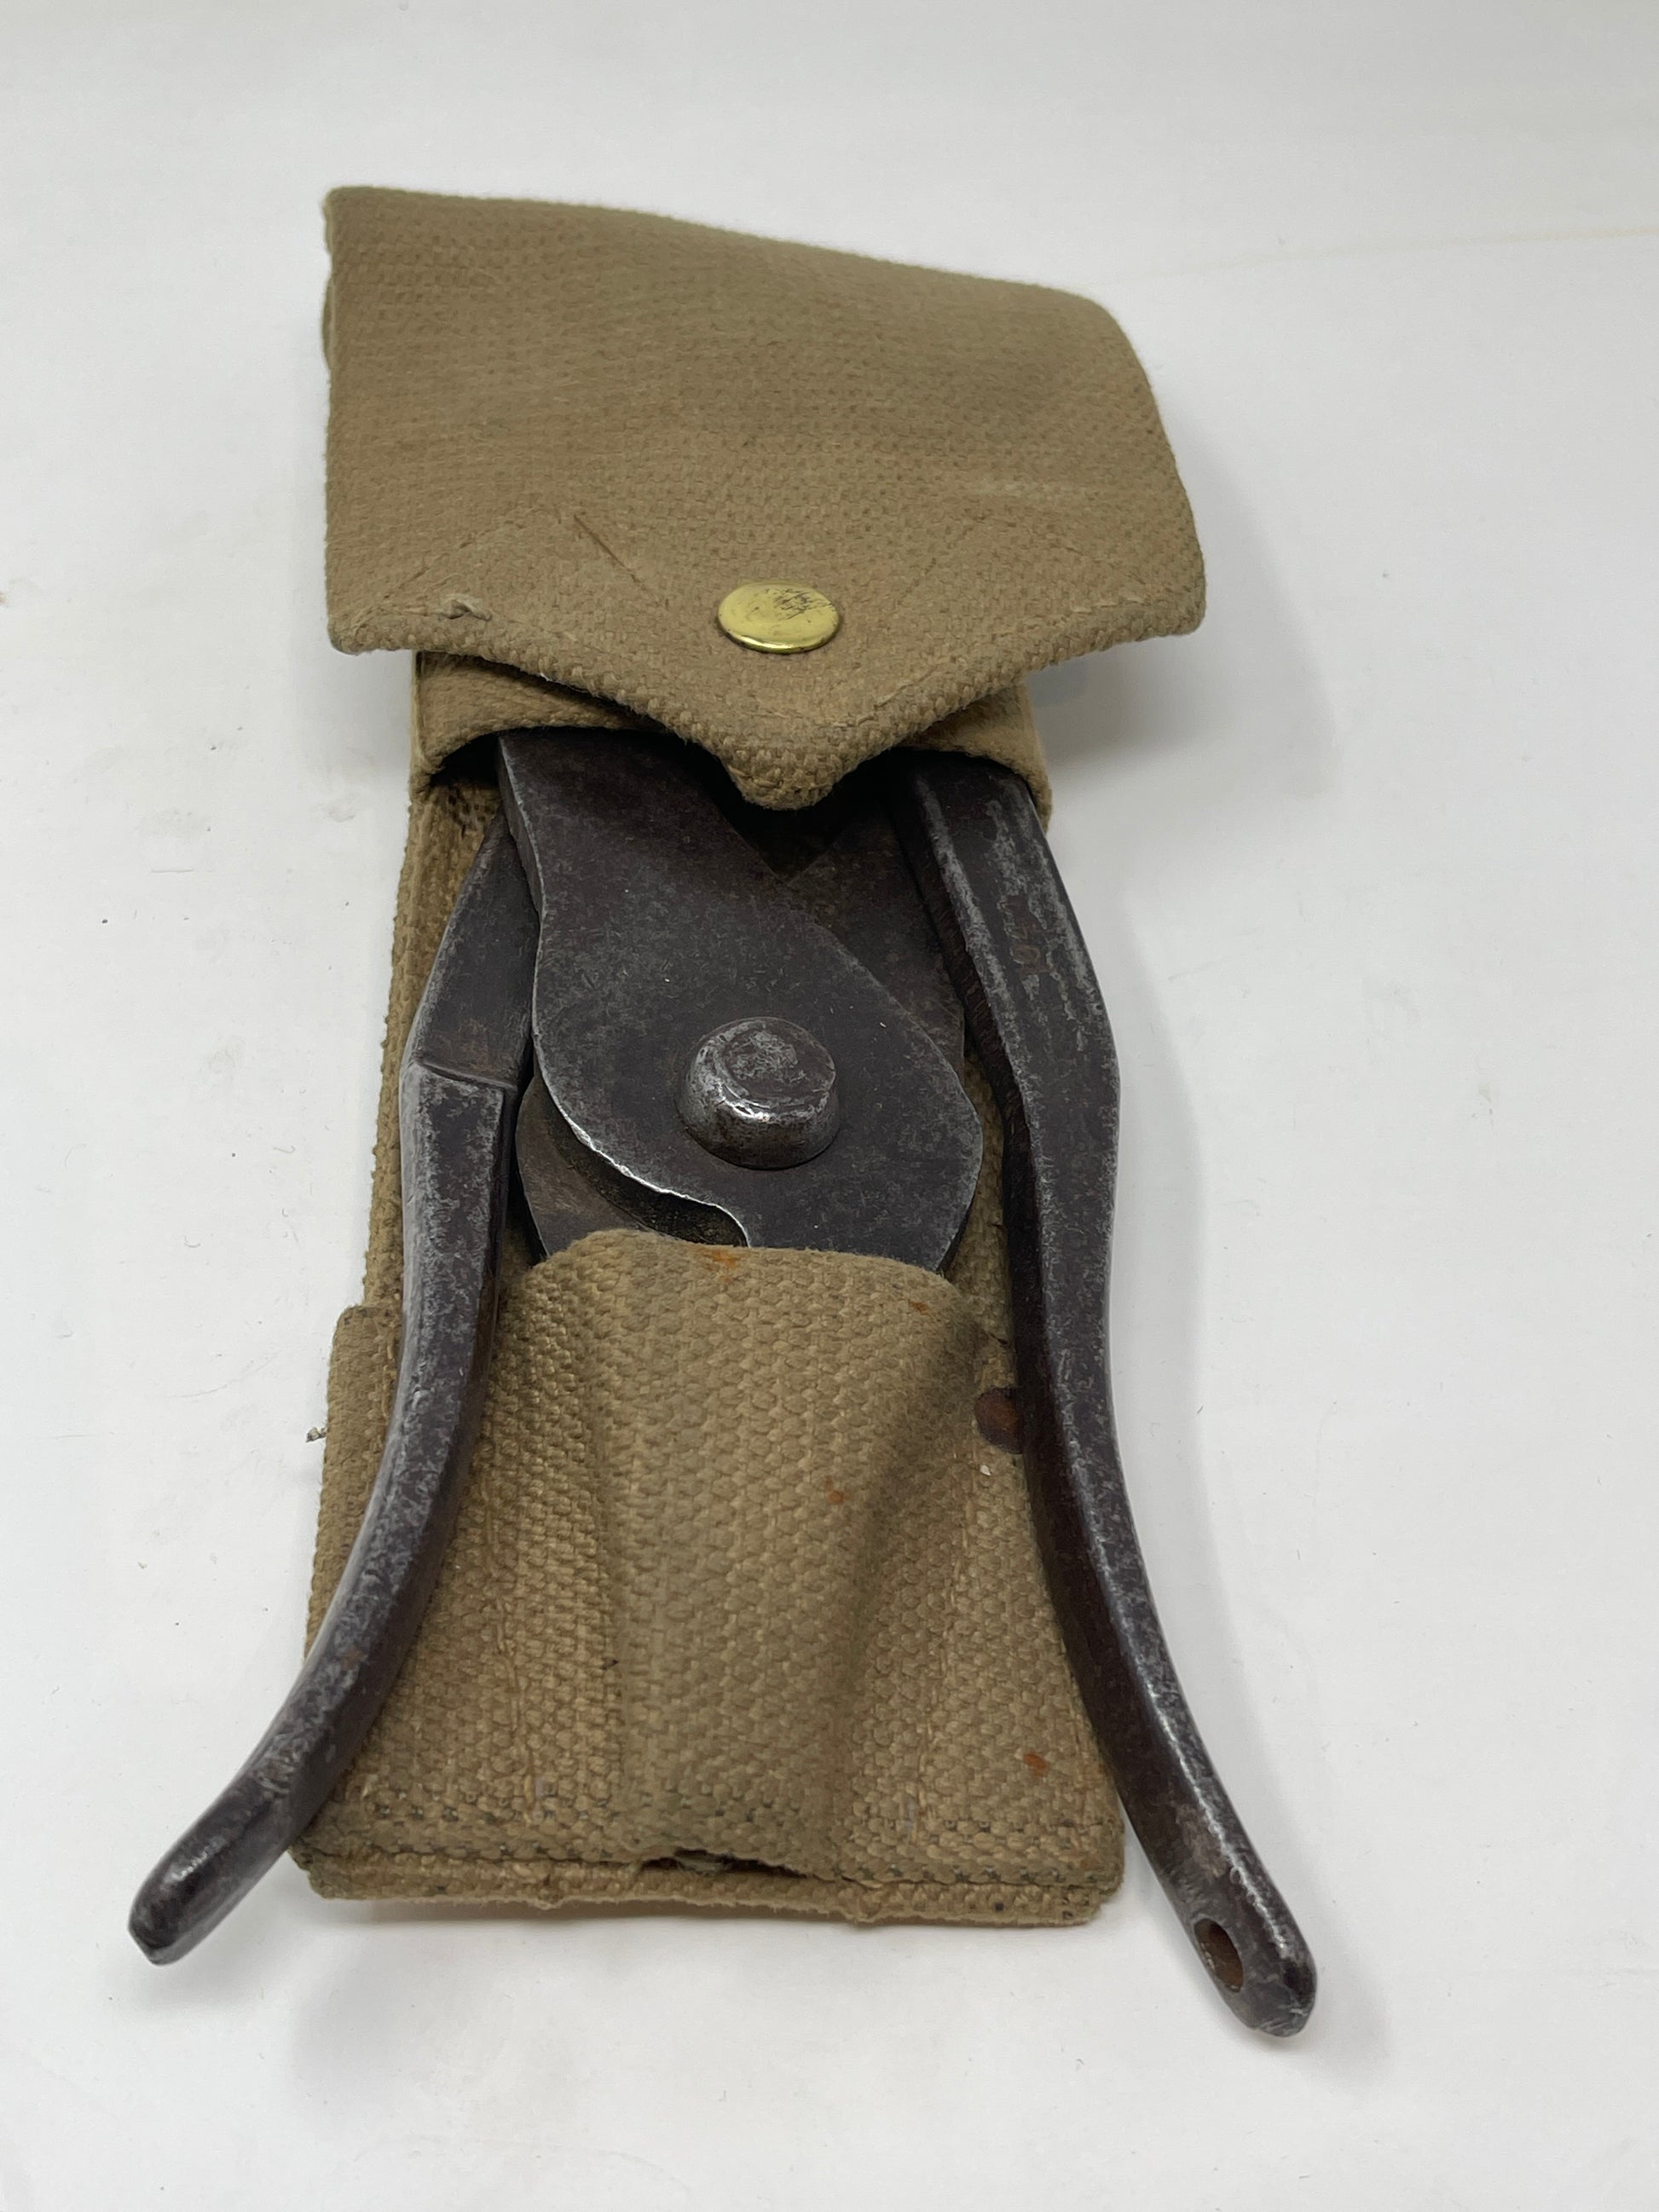 ww2 british army wire cutters inside webbing pouch